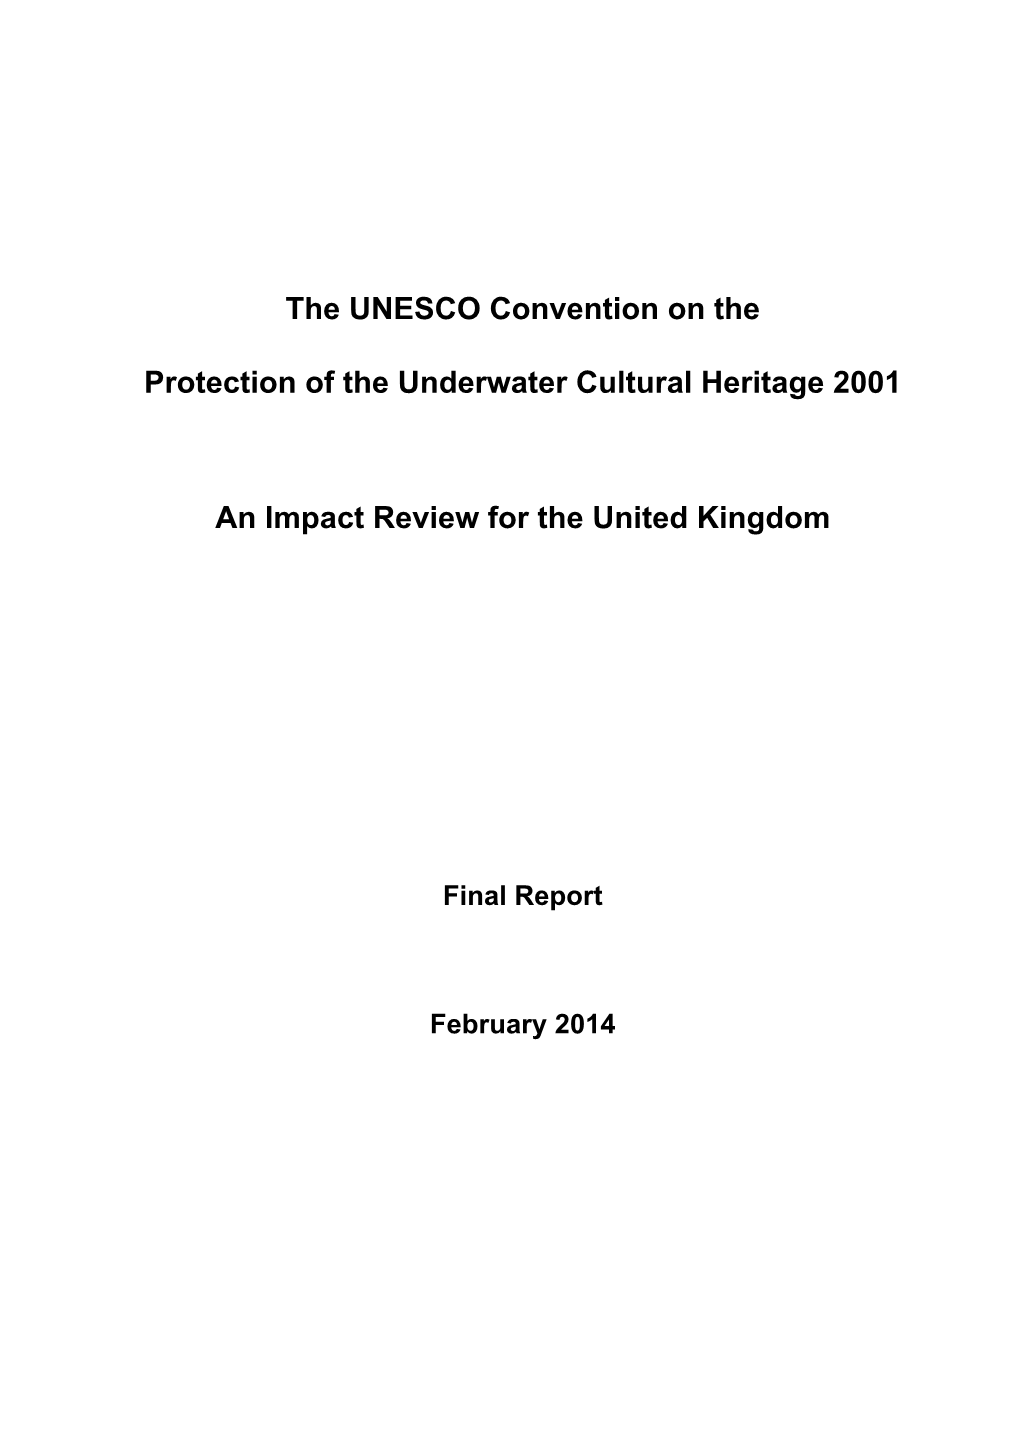 UNESCO Impact Review February 2014